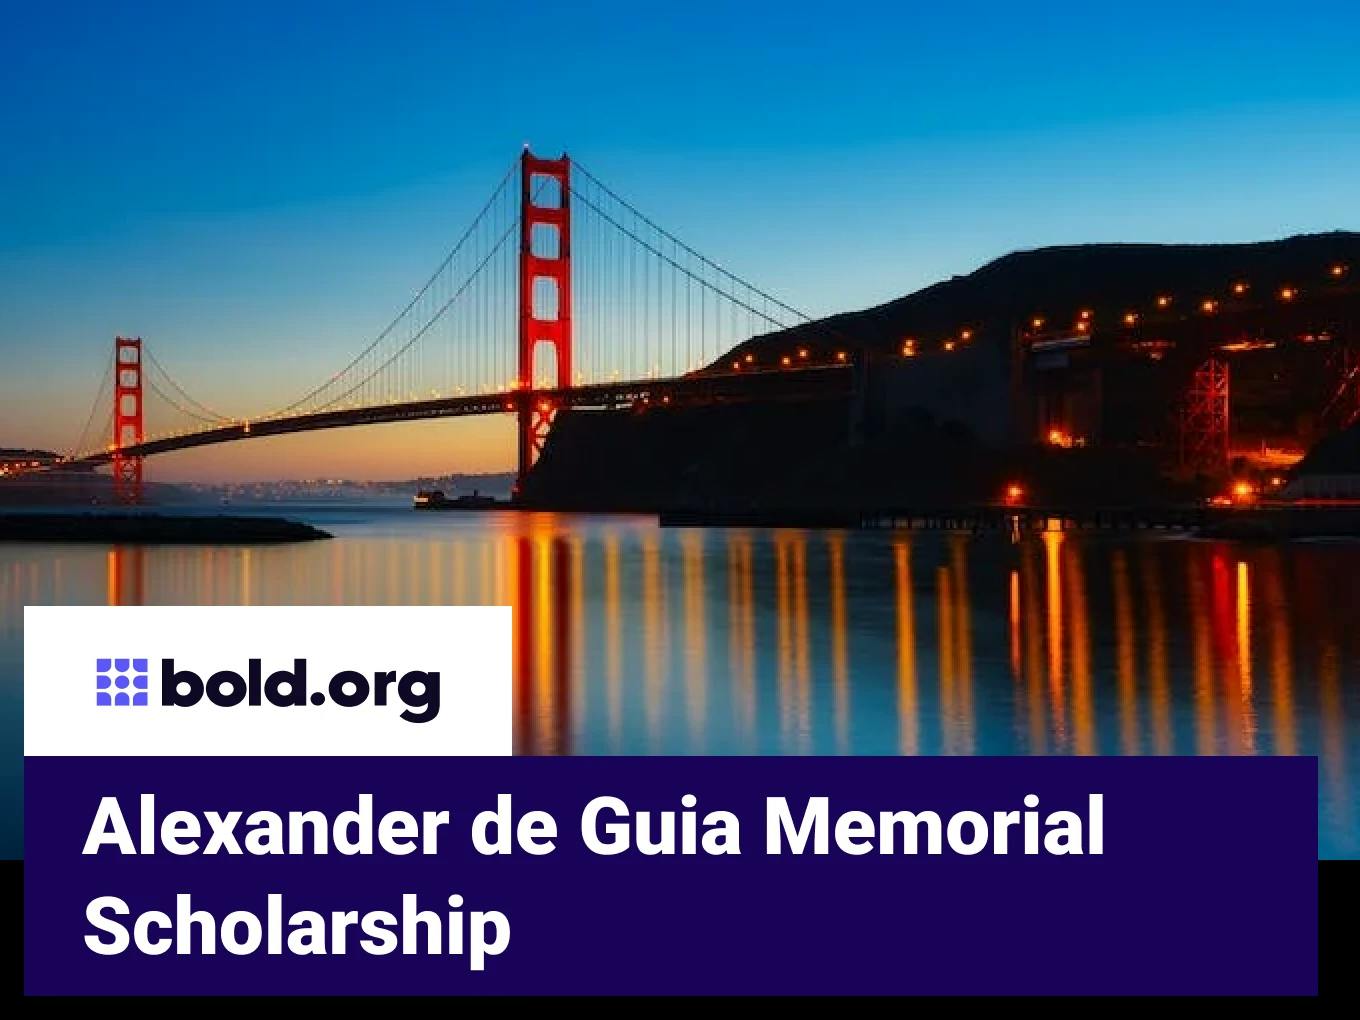 Alexander de Guia Memorial Scholarship